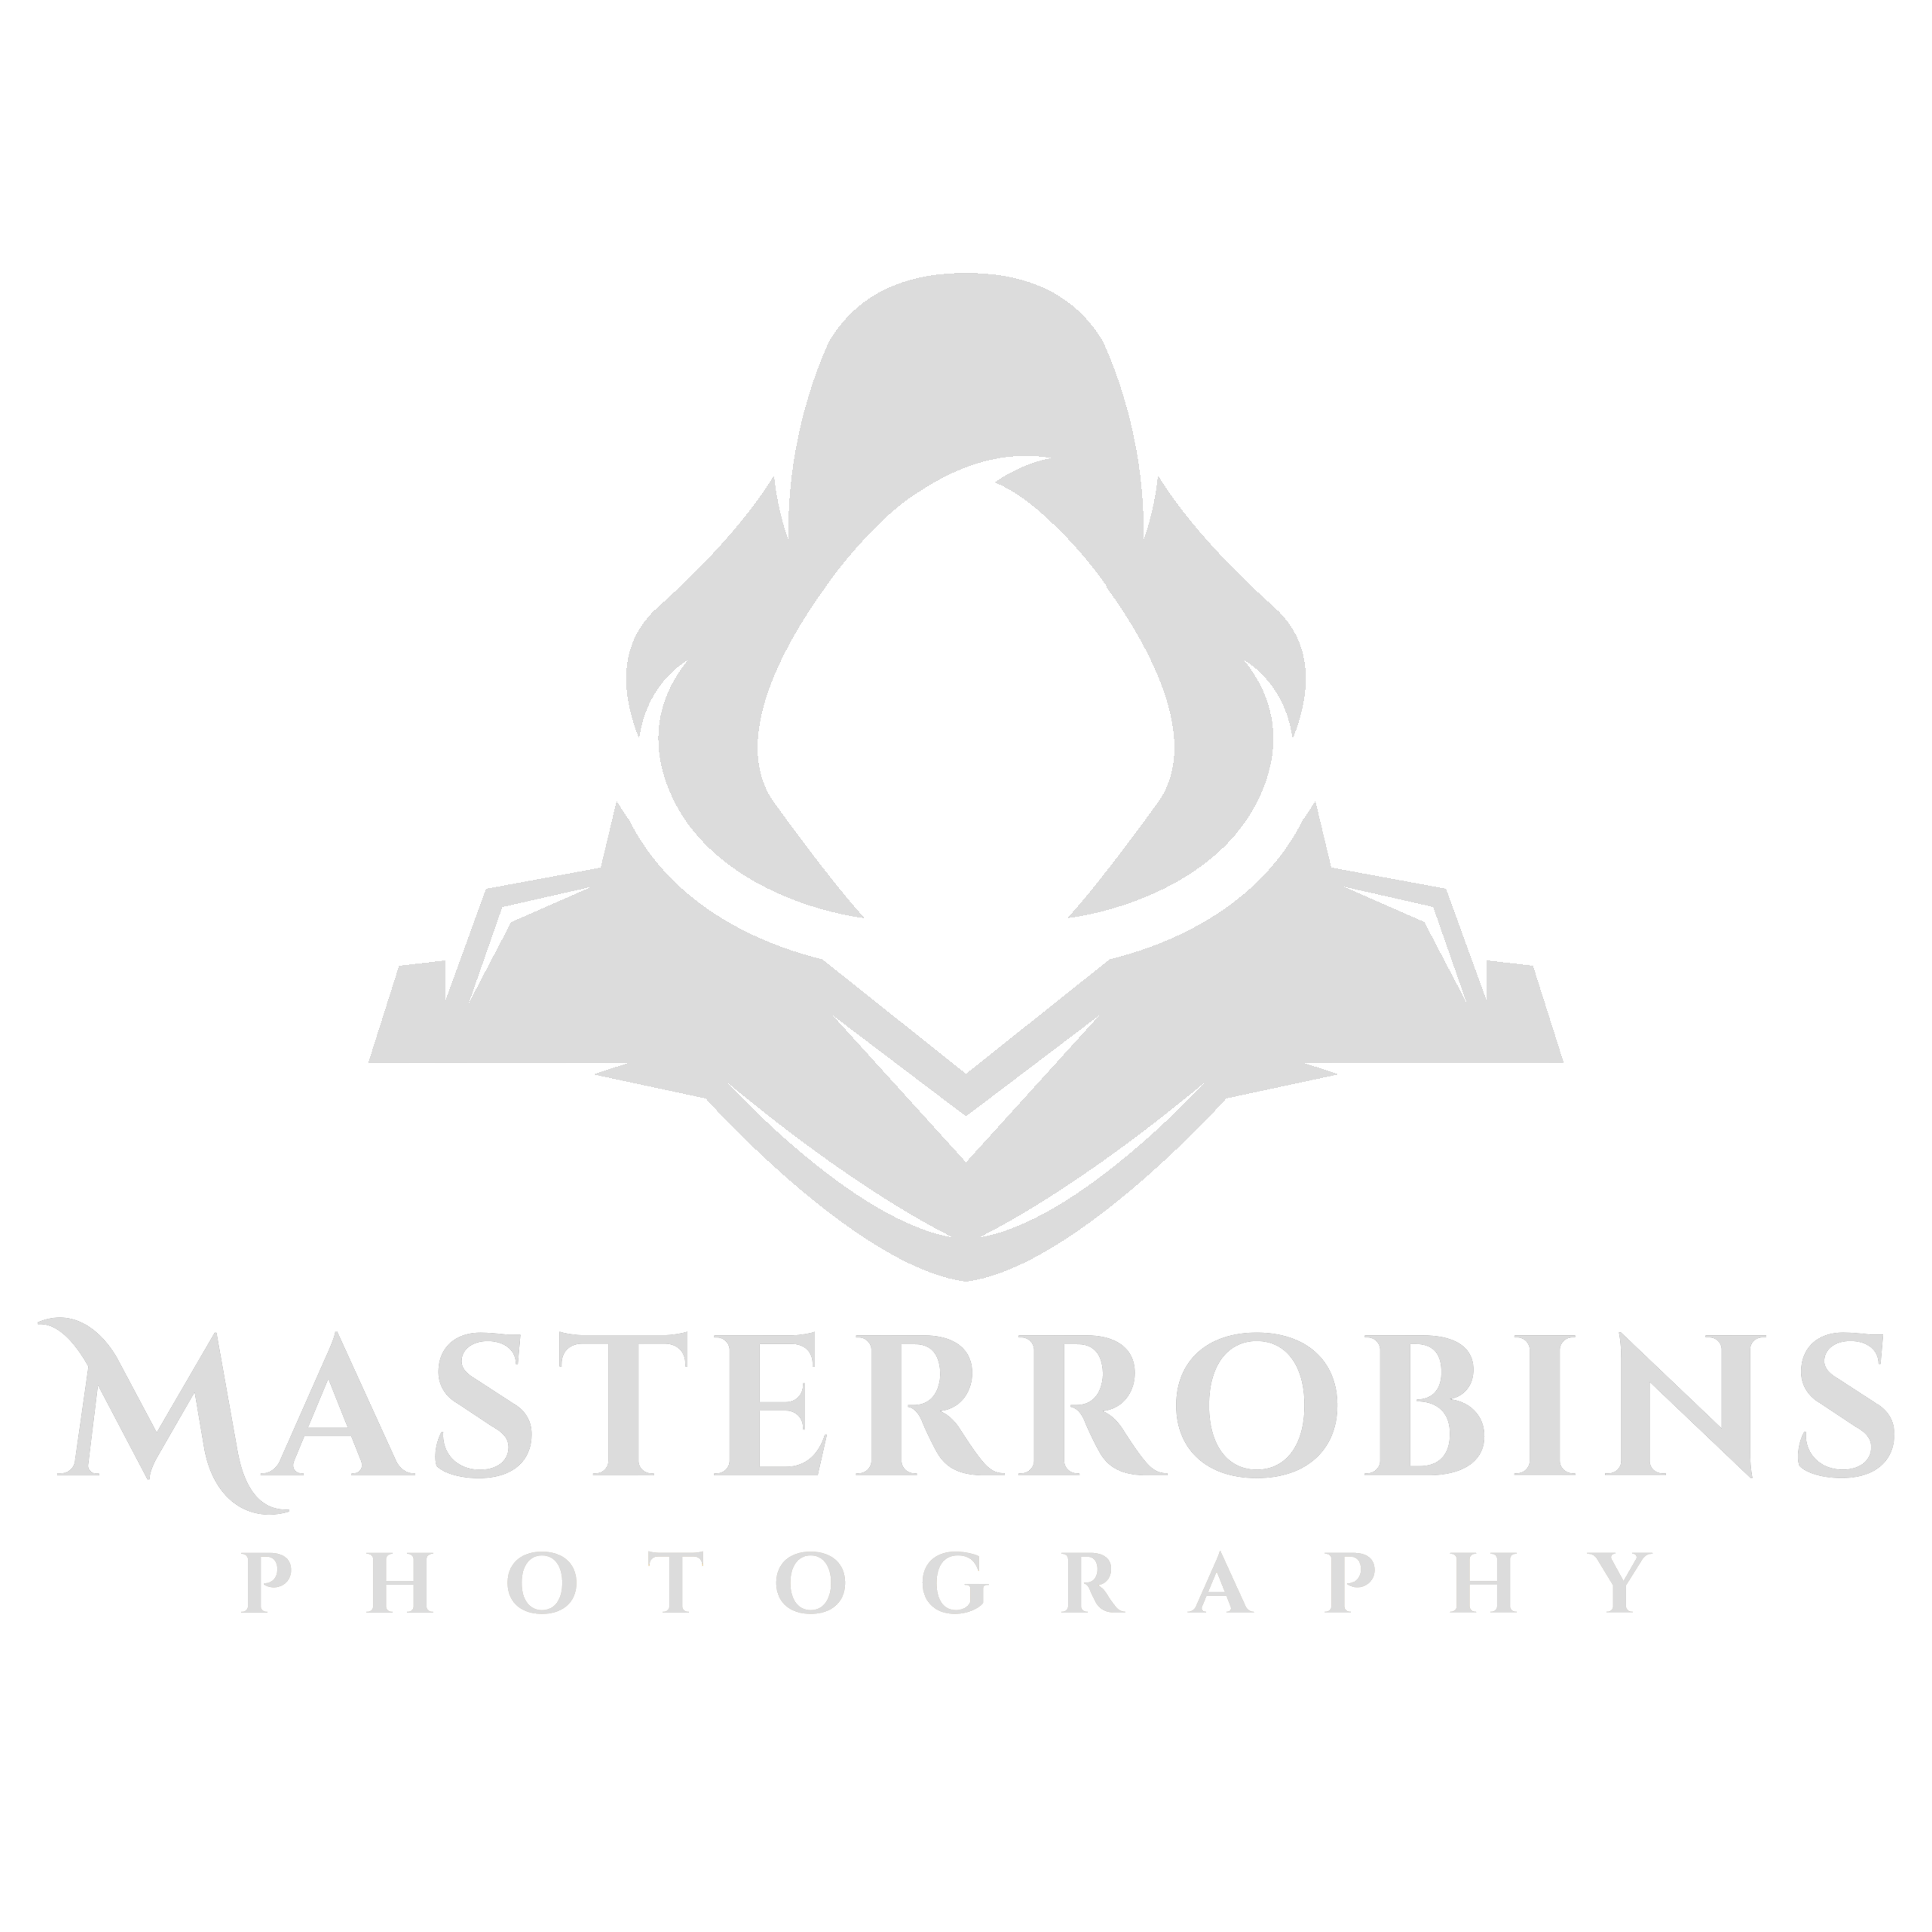 MasterRobins Photography